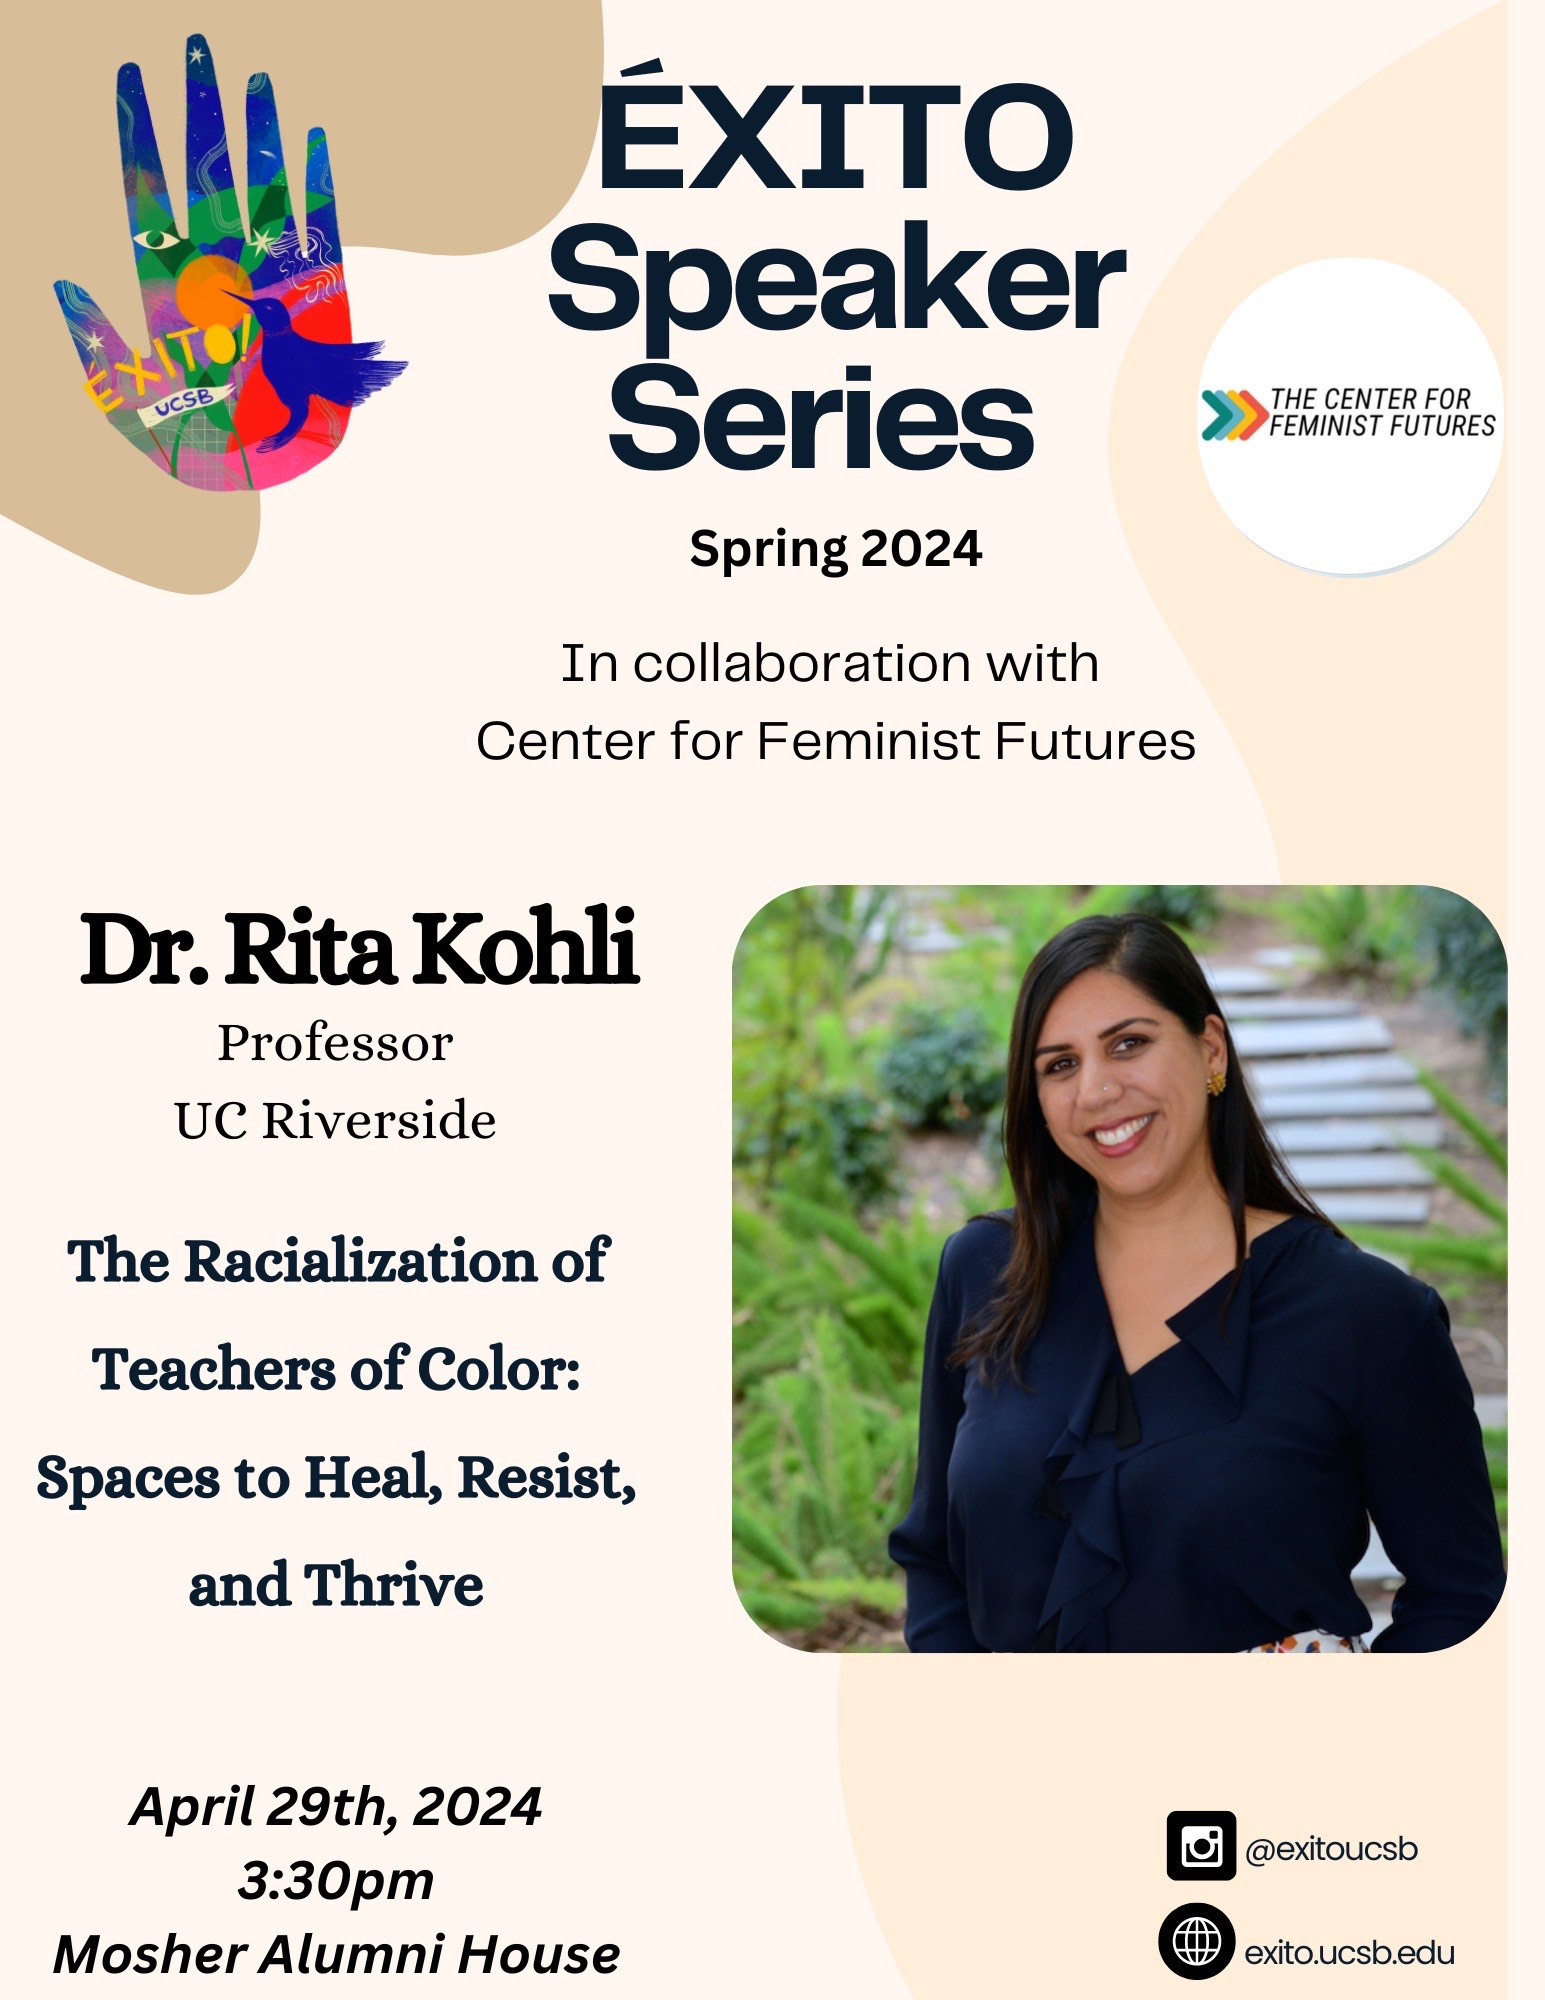 Flyer Featuring information for Dr. Rita Kohli Talk on April 29, 2024